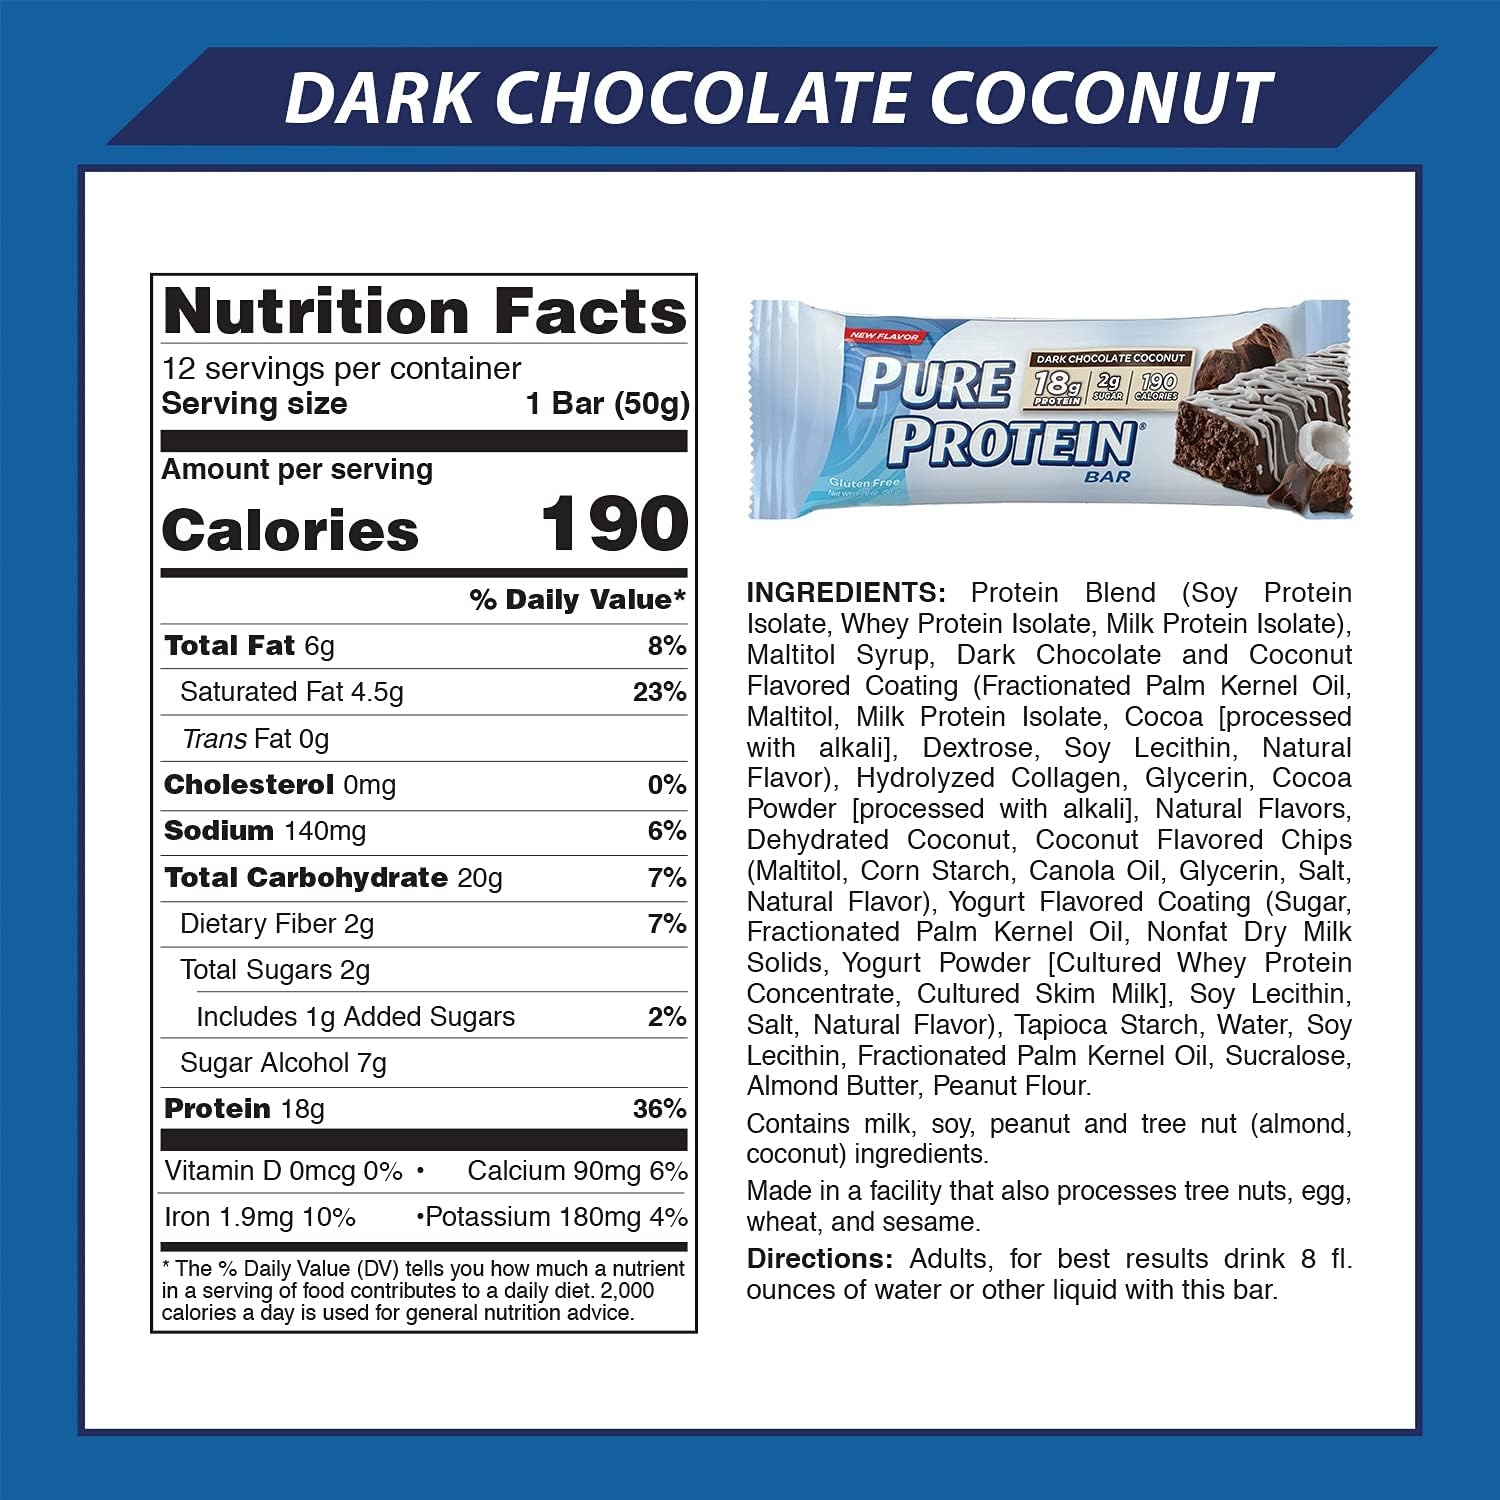 Pure Protein Dark Chocolate Coconut Protein Bars, 1.76 oz, 12 Count